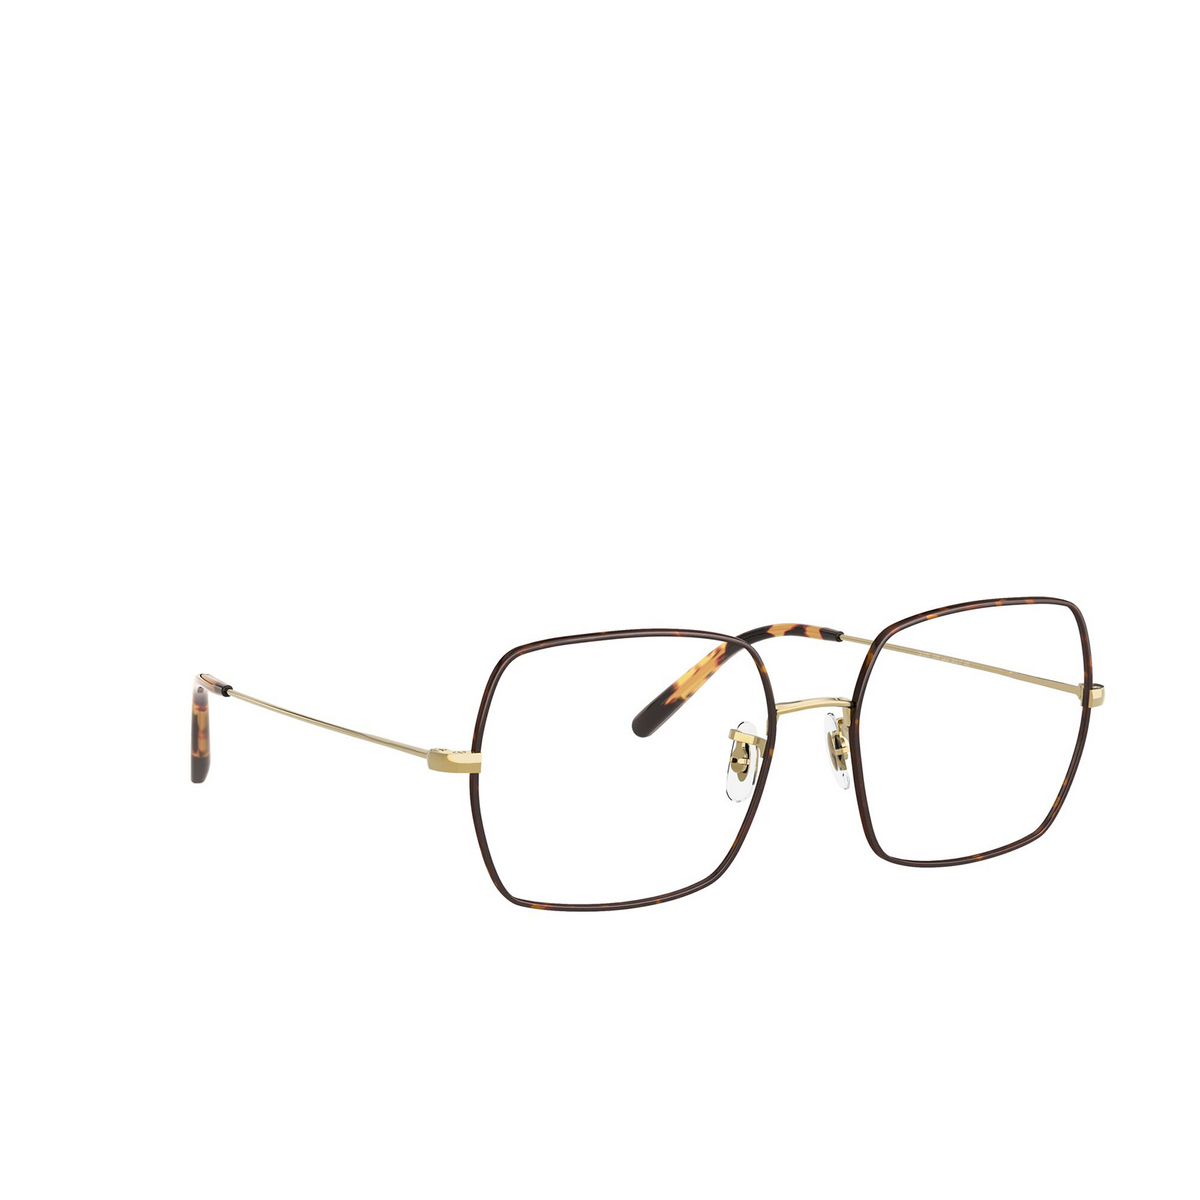 Oliver Peoples® Irregular Eyeglasses: Justyna OV1279 color Gold / Tortoise 5295 - three-quarters view.